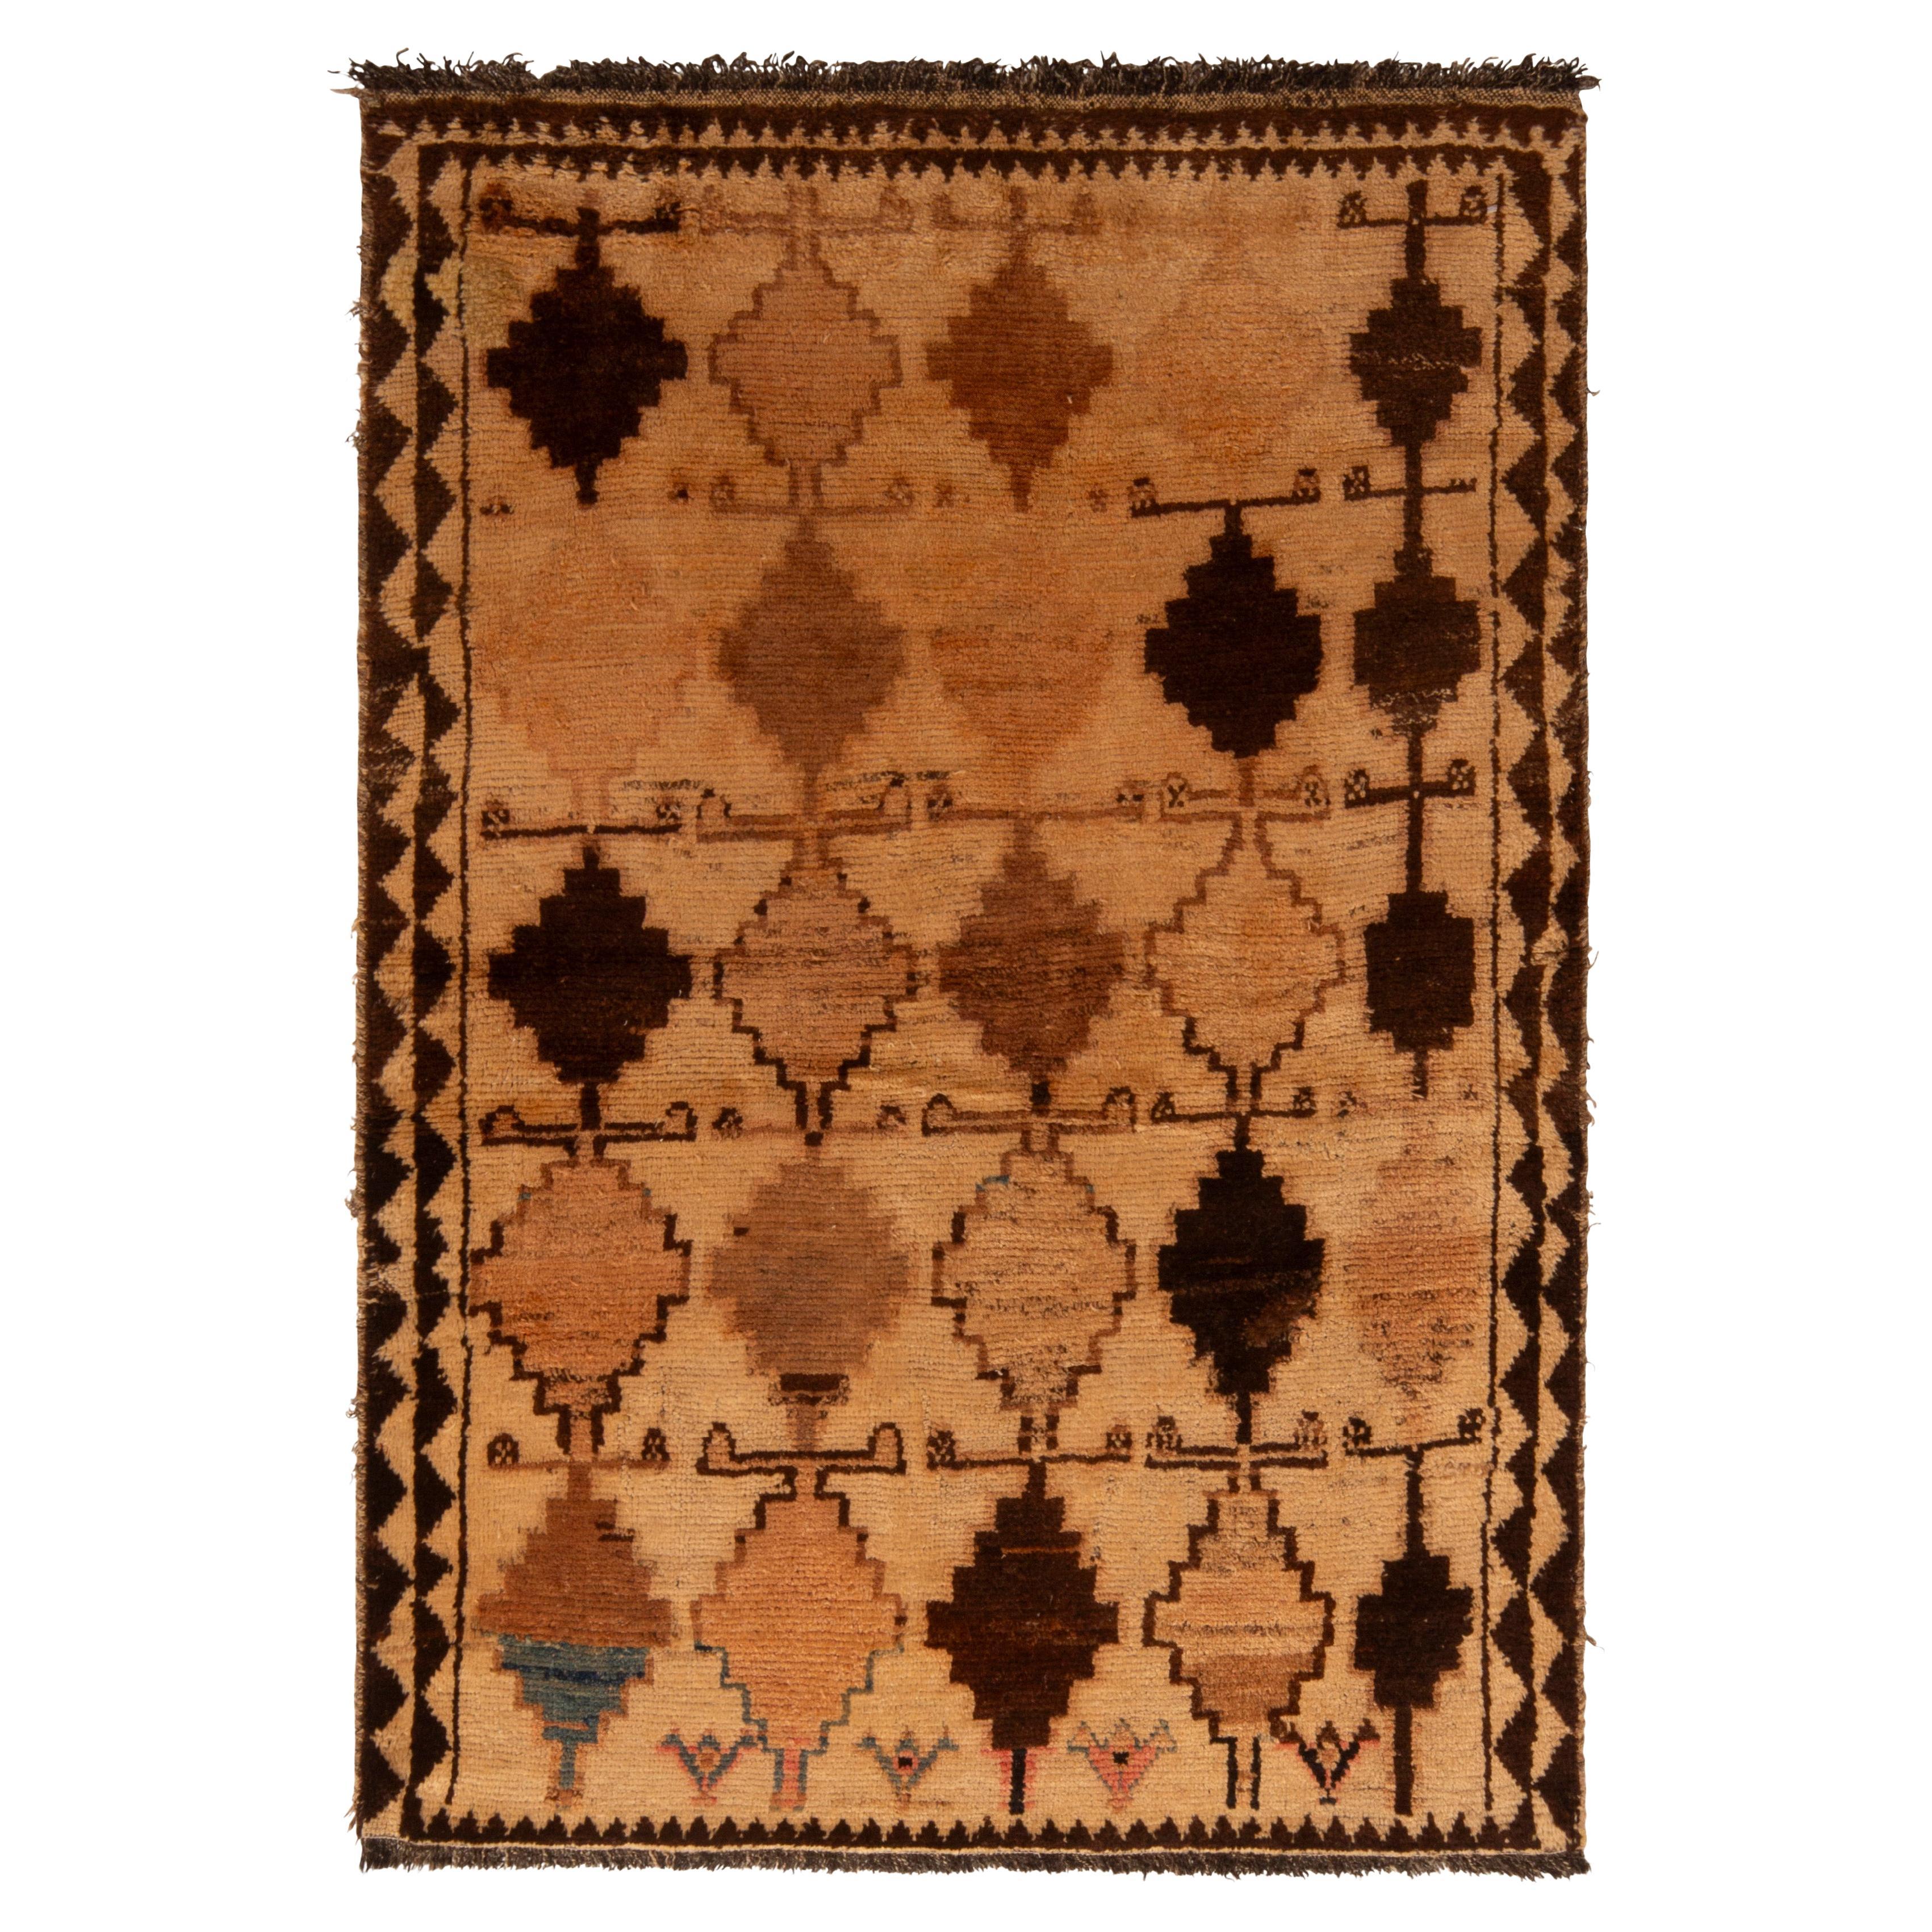 Antique Gabbeh Rug Tribal Beige Brown Persian Diamond Pattern by Rug & Kilim